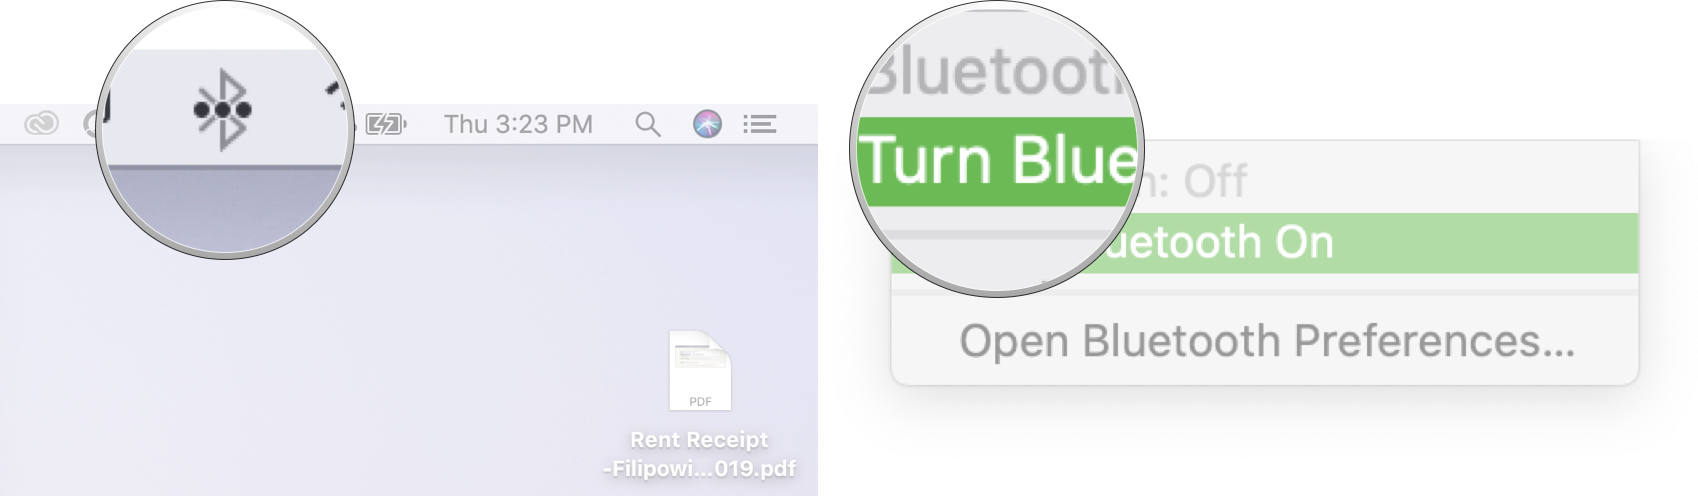 Mengaktifkan Bluetooth di Mac: Klik simbol Bluetooth di bar menu, lalu klik Aktifkan Bluetooth